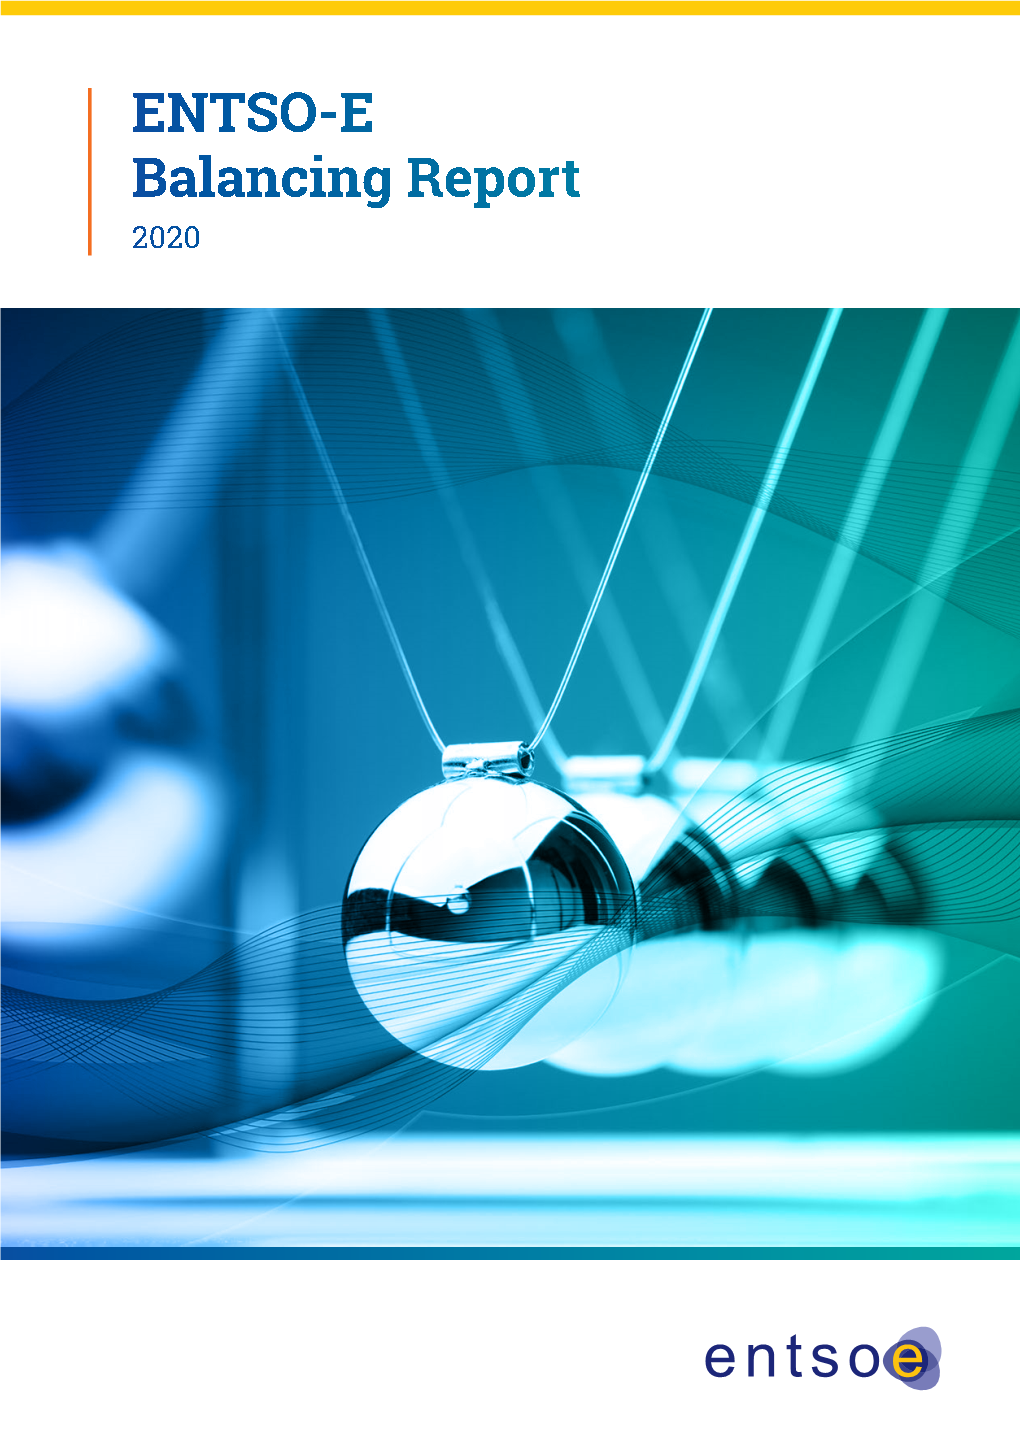 ENTSO-E Balancing Report 2020